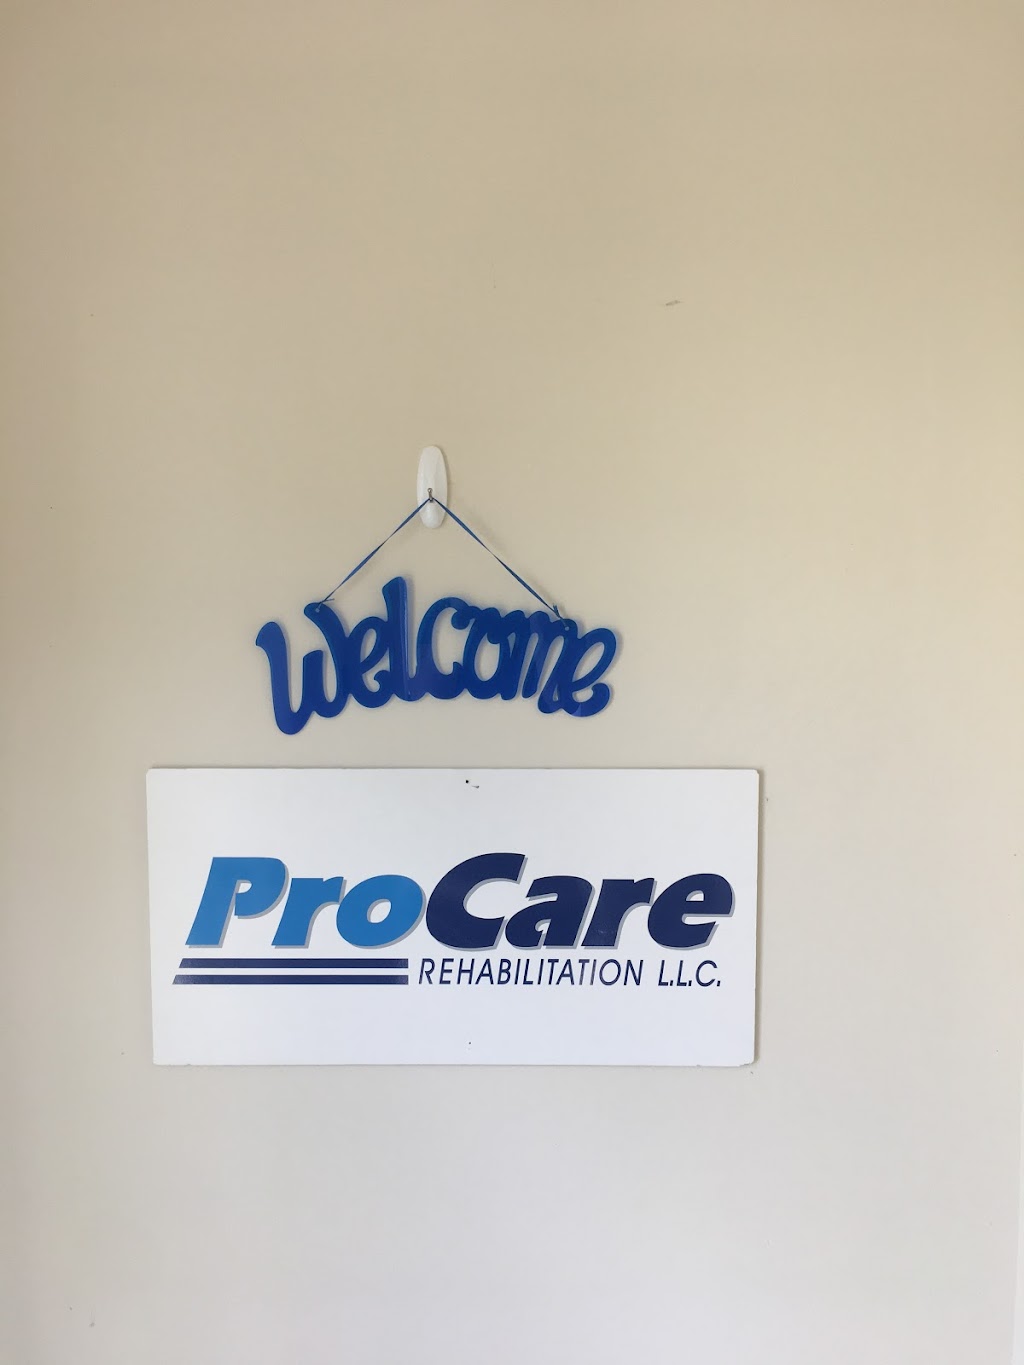 ProCare Rehabilitation Summit | 557 Morris Ave, Summit, NJ 07901, USA | Phone: (908) 273-1400